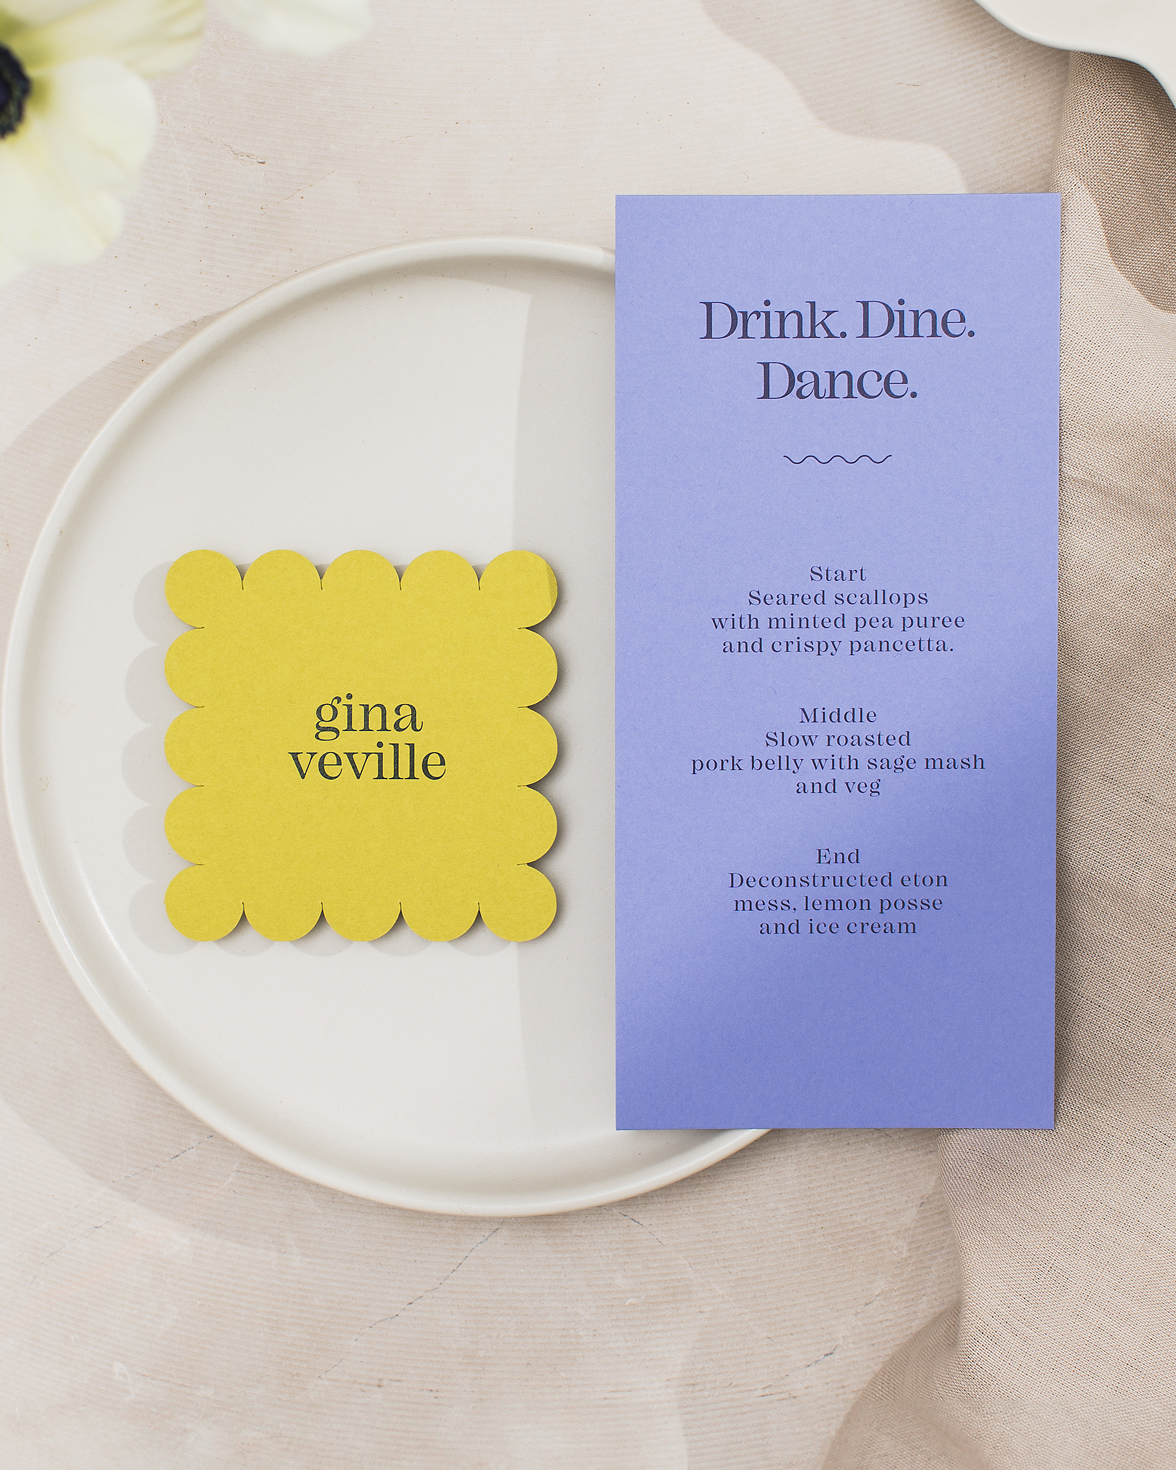 Purple wedding menu with drink, dine, dance typography. Citrus green scalloped edge wedding name card